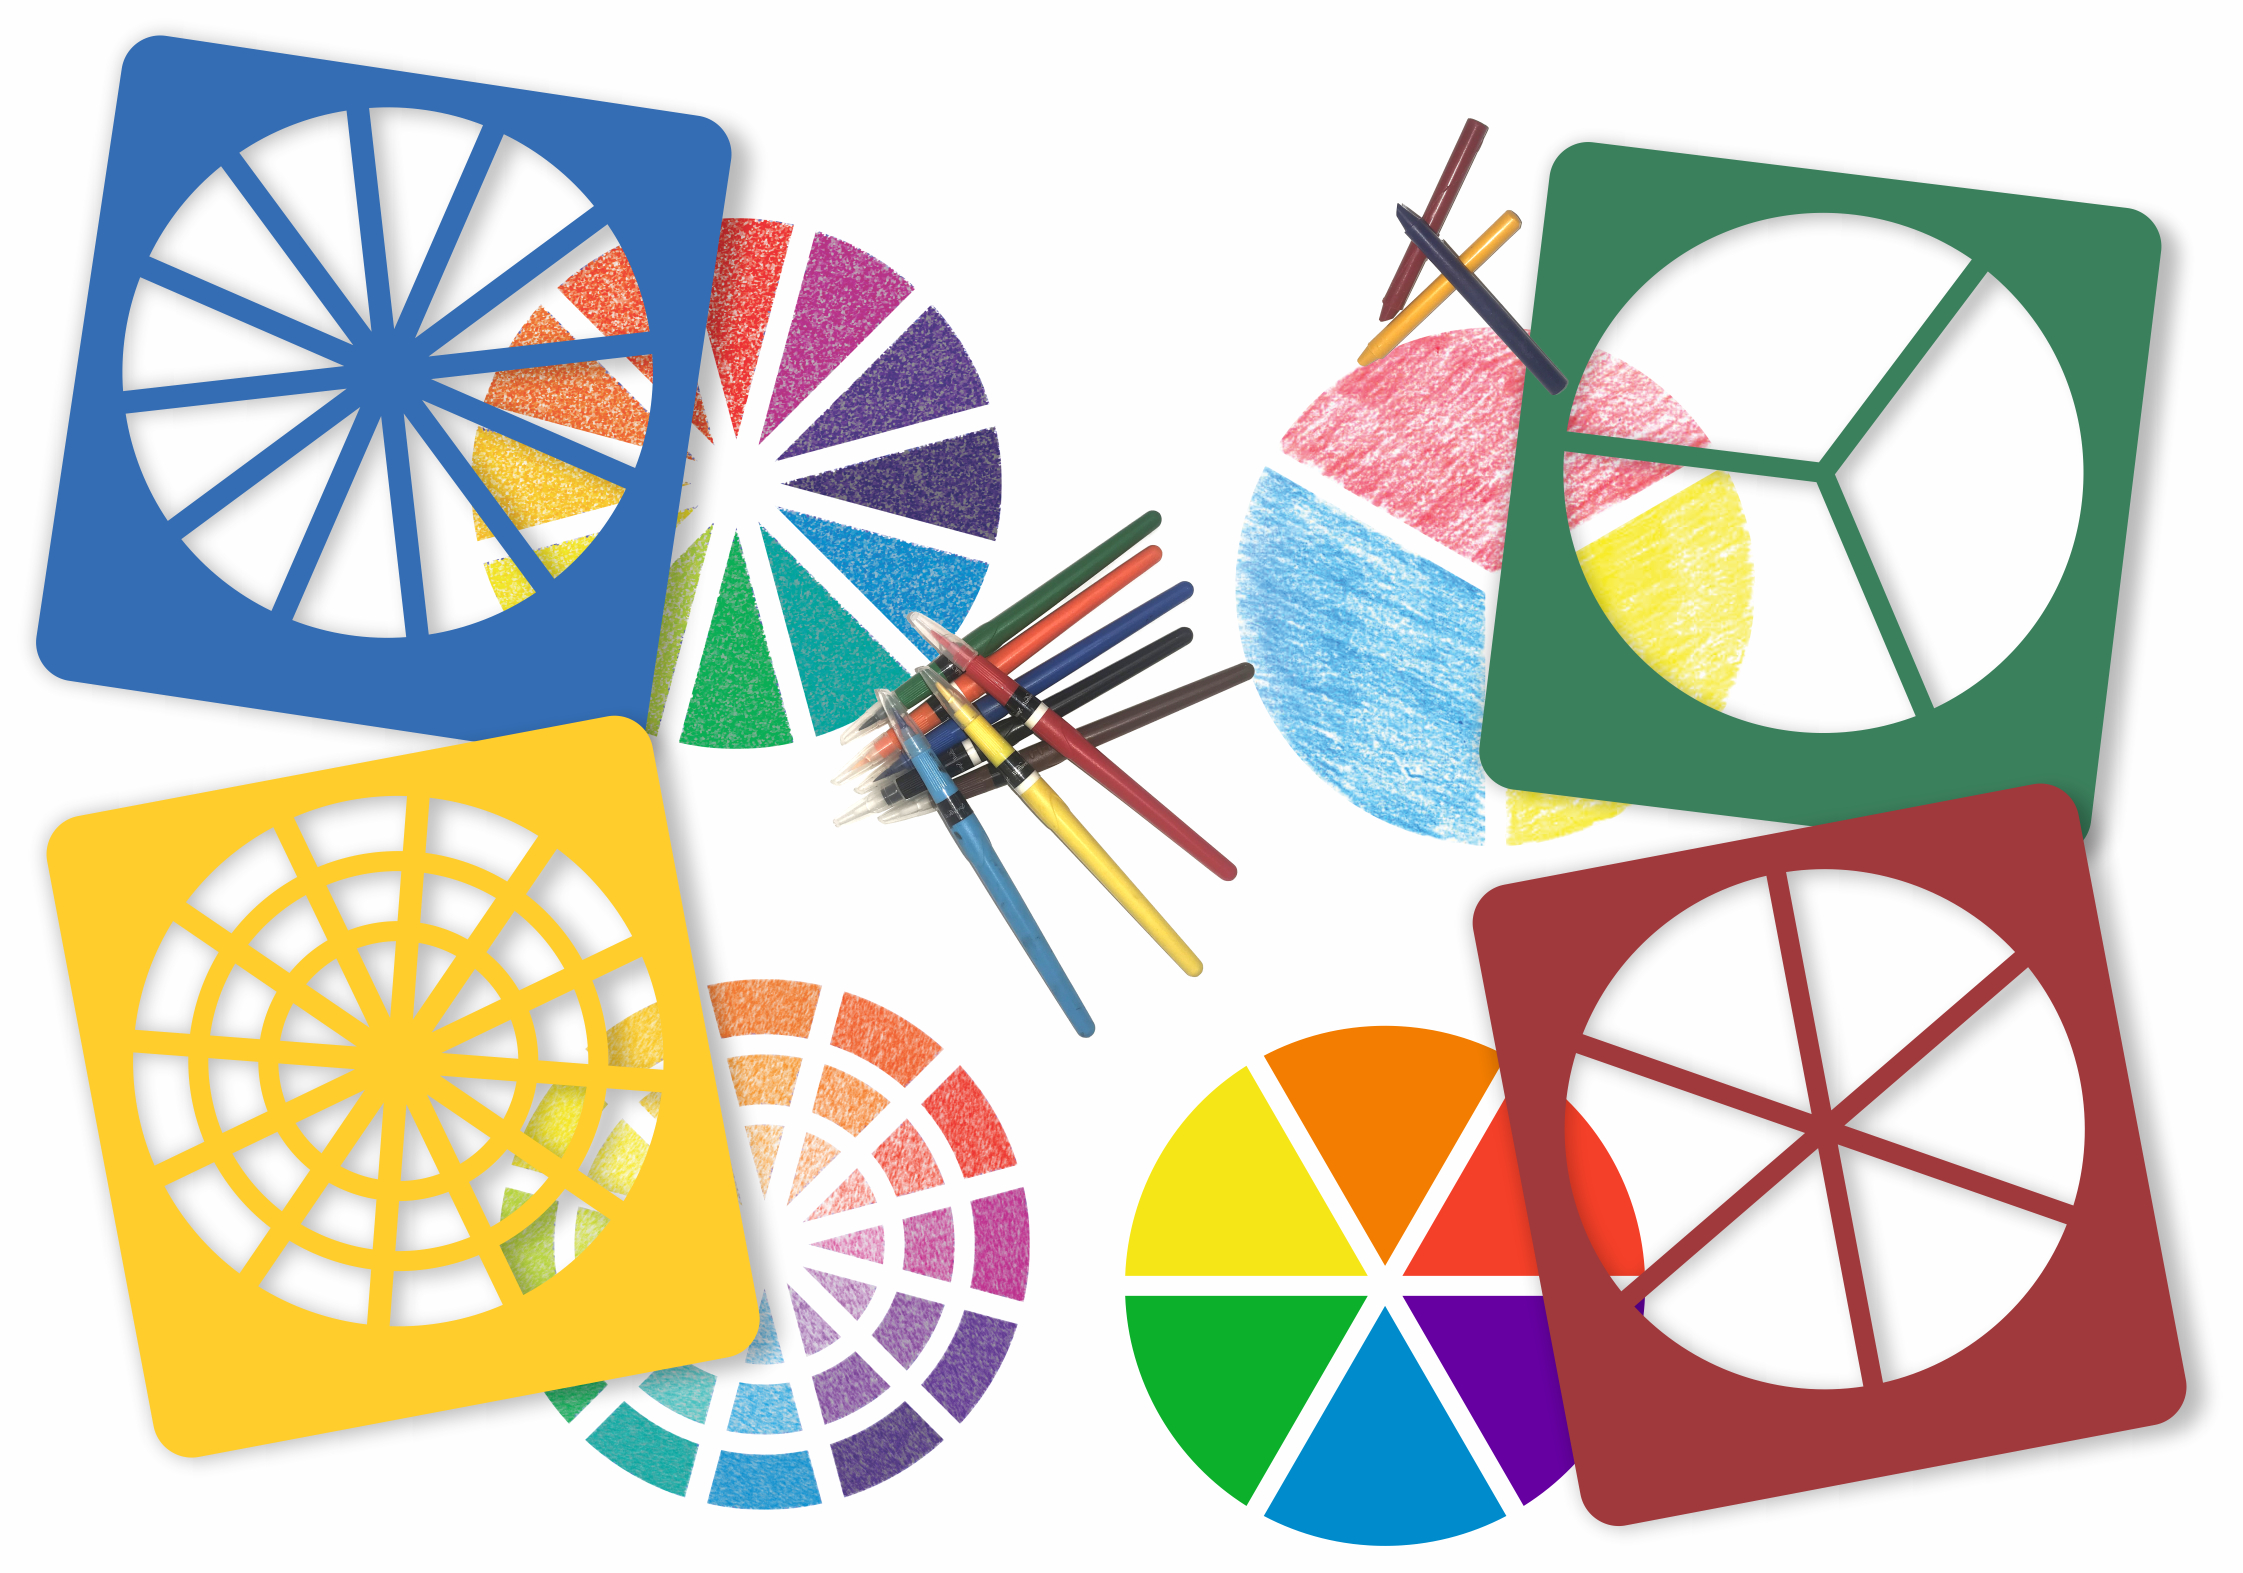 Color Wheel Spinner Art Lesson & Worksheets for Elementary & Middle School  Art